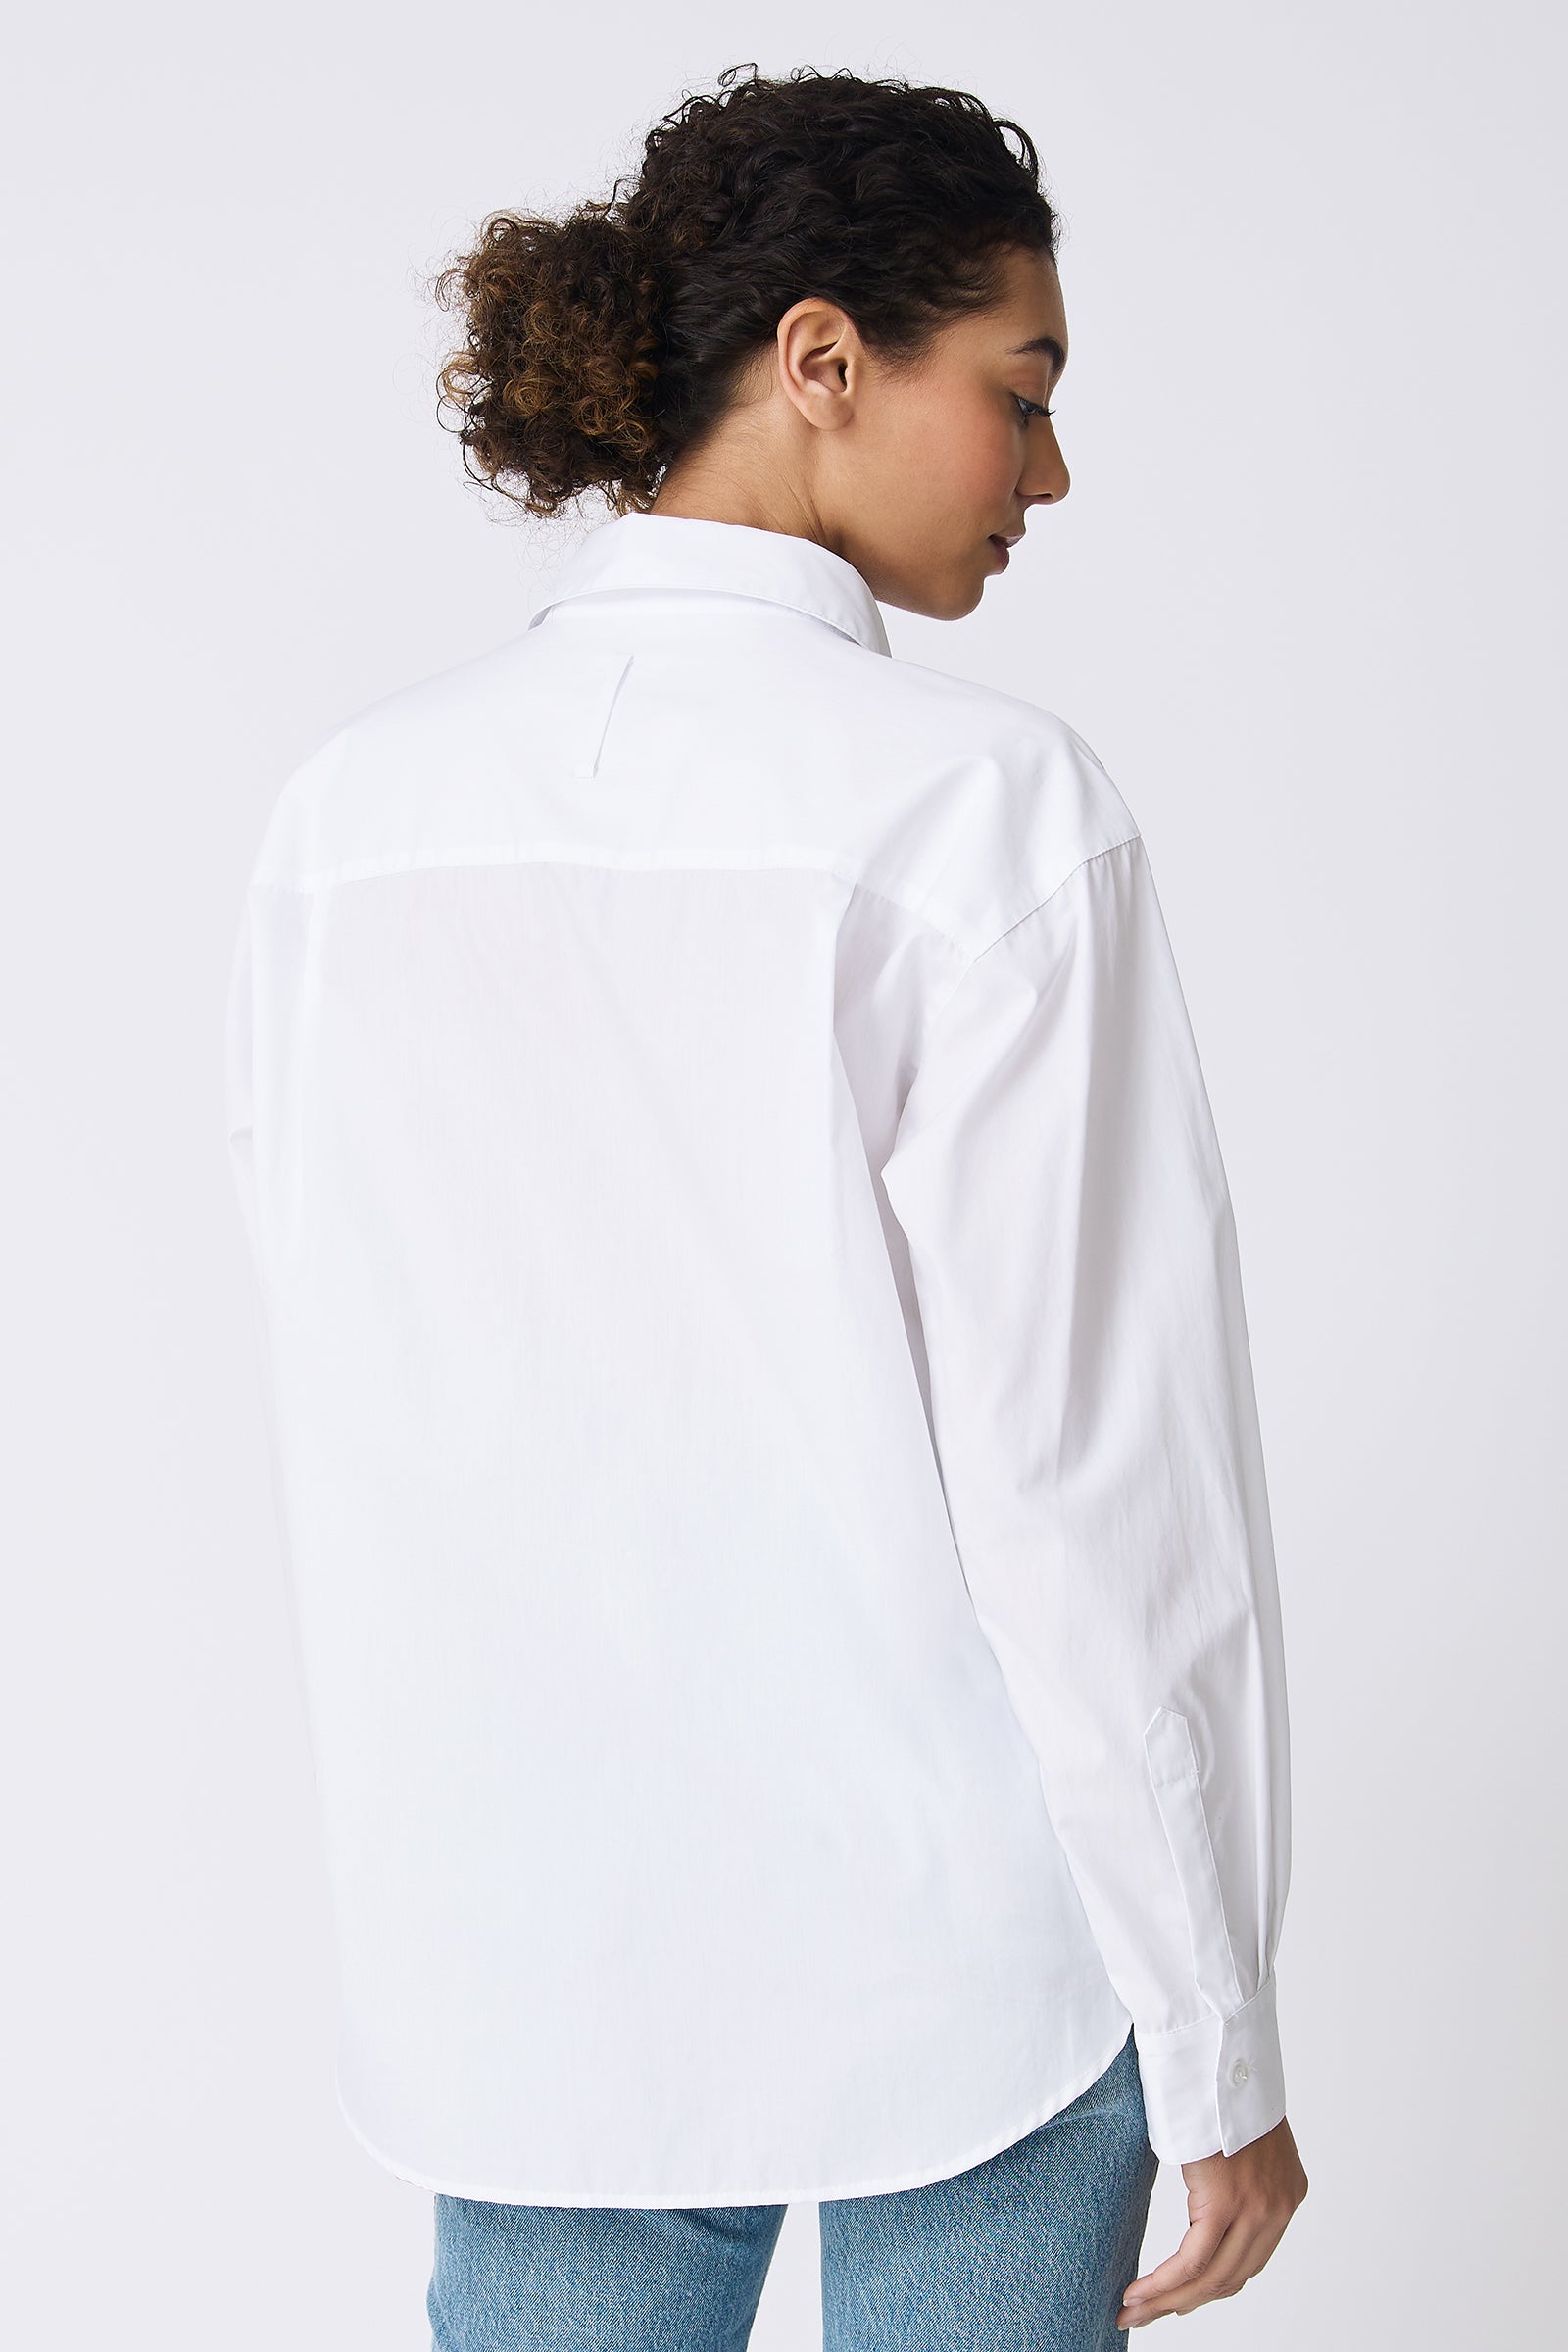 Kal Rieman Joni Boyfriend Shirt in White Poplin on model back view